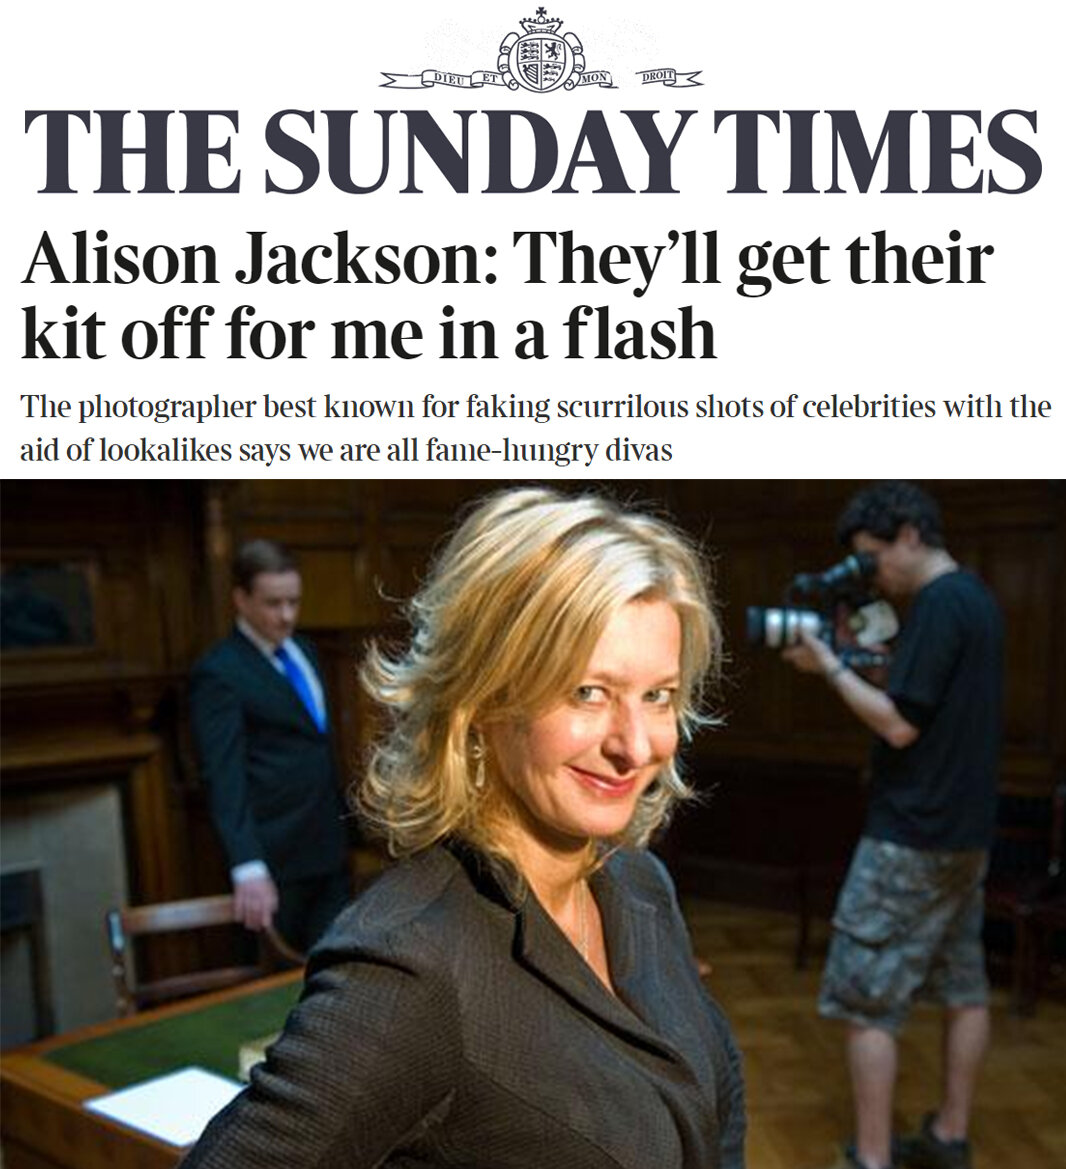 The Sunday Times Alison Jackson Nude Icon copy.jpg